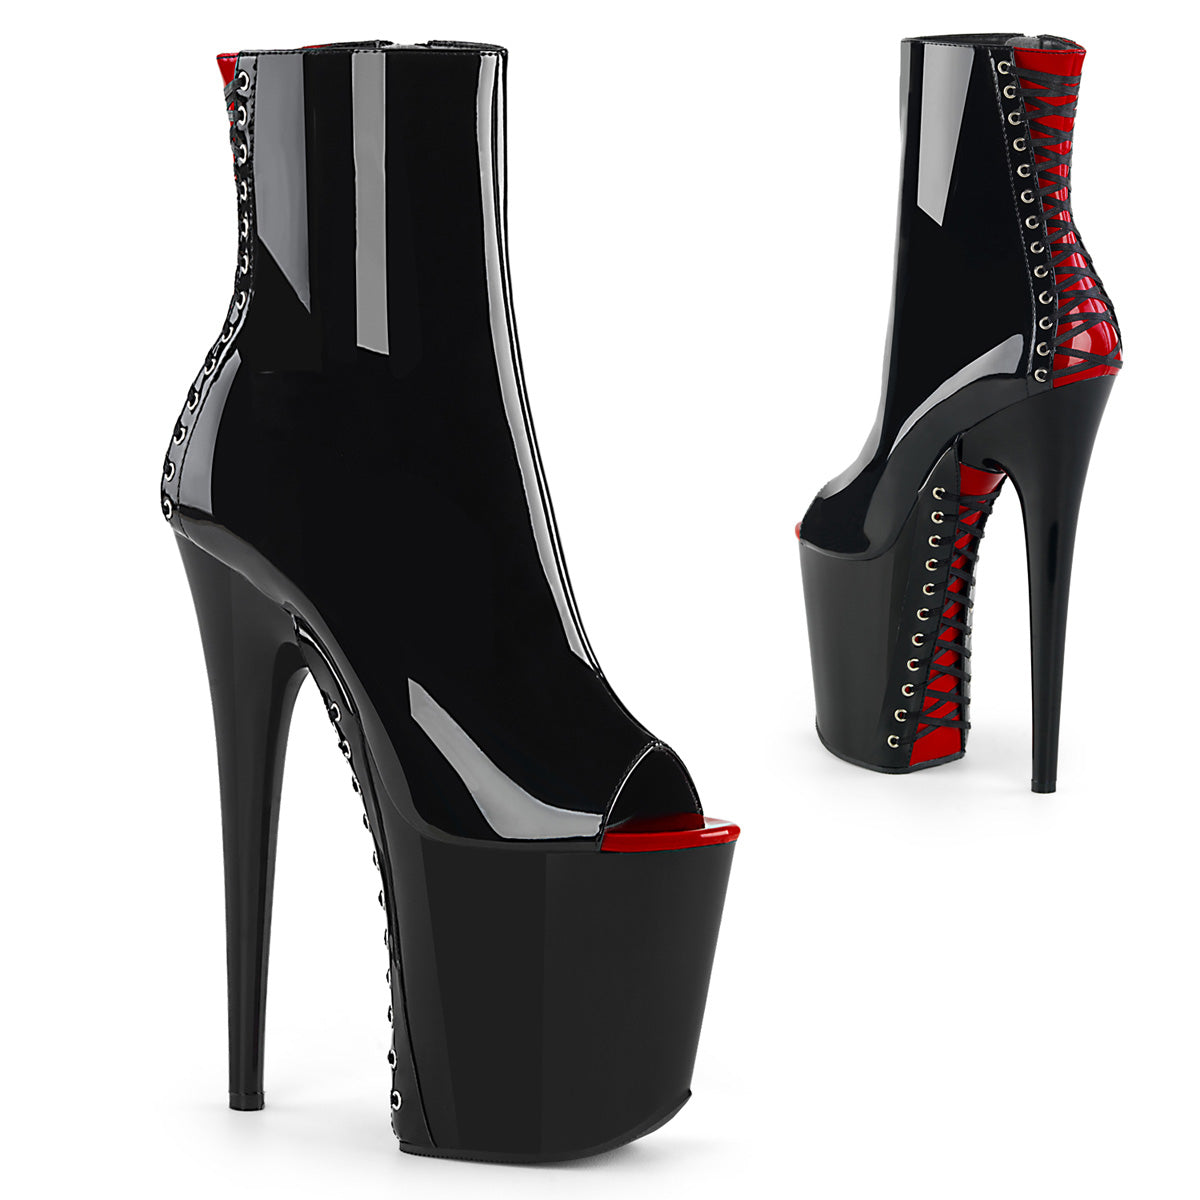 FLAMINGO-1025 8" Heel Black and Red  Stripper Platforms High Heels